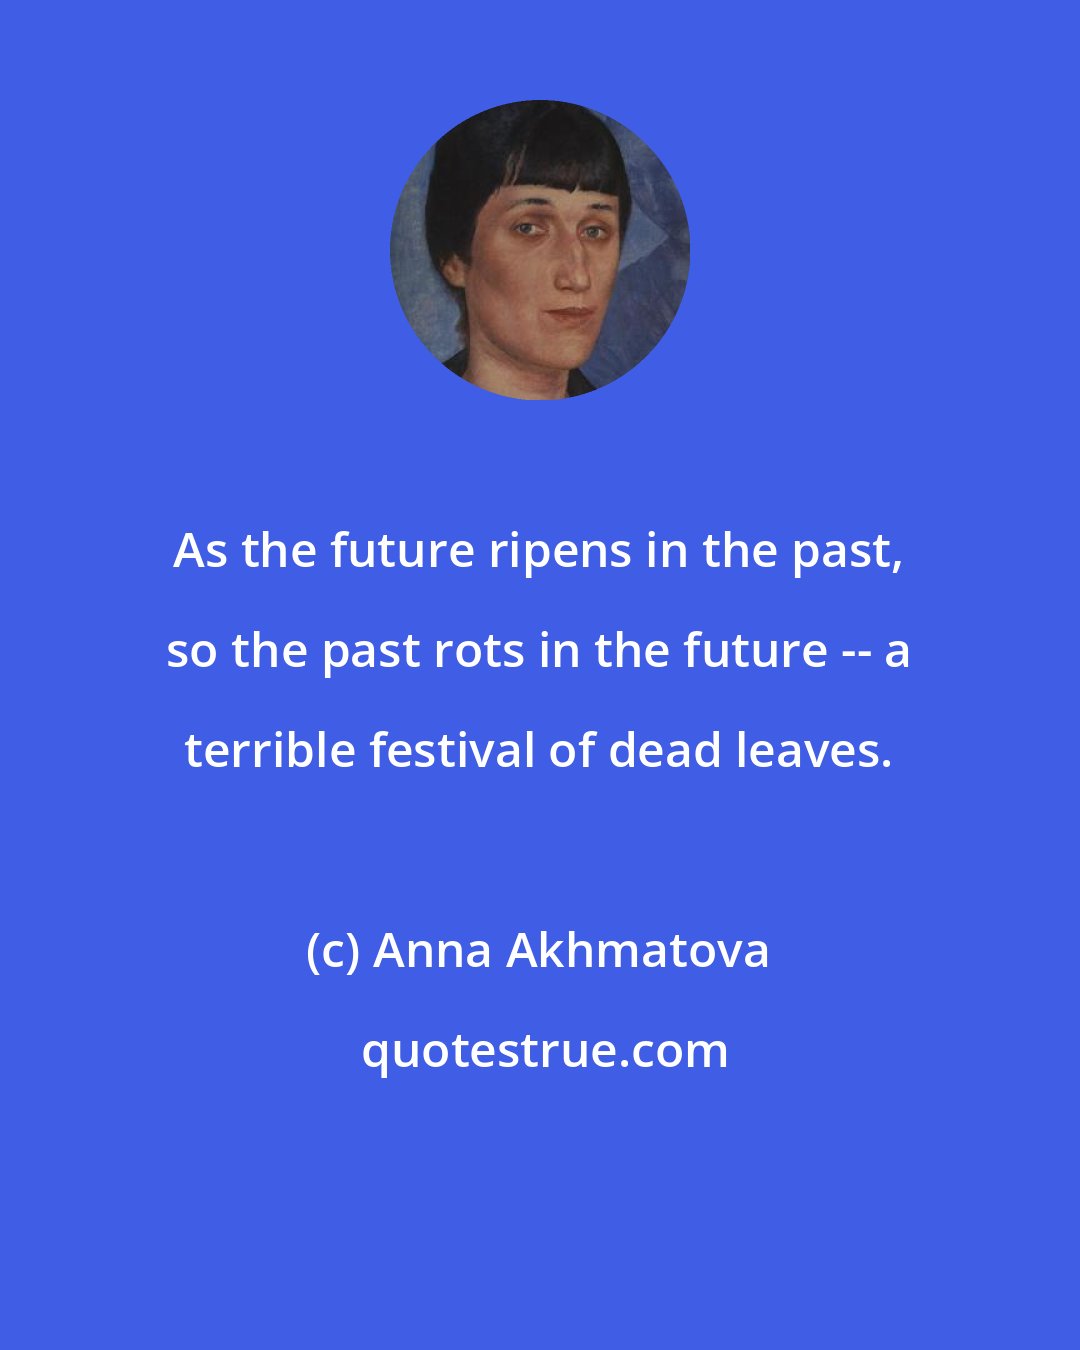 Anna Akhmatova: As the future ripens in the past, so the past rots in the future -- a terrible festival of dead leaves.